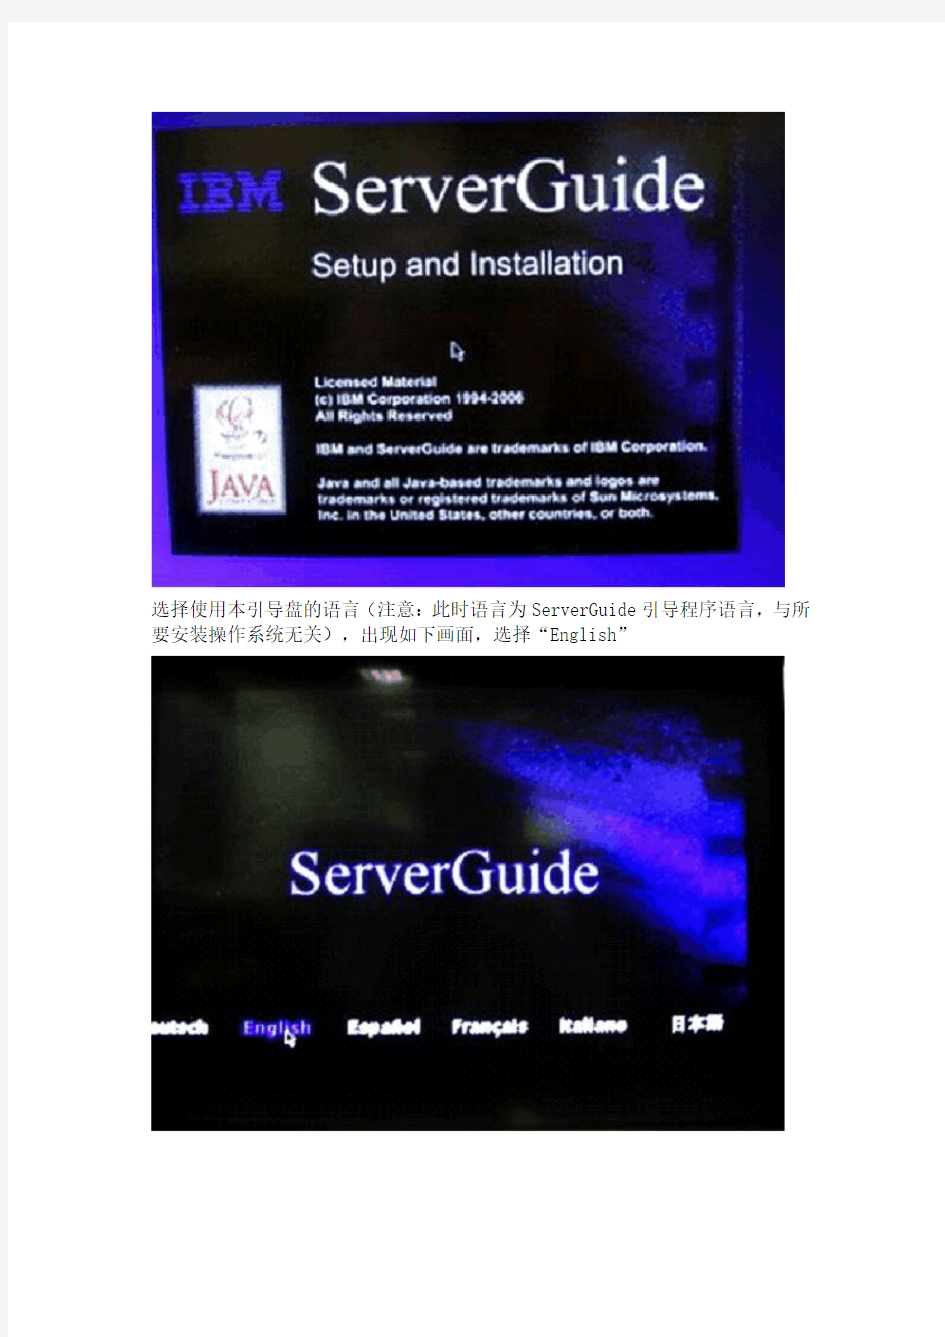 X3950 ServerGuide 引导安装指南